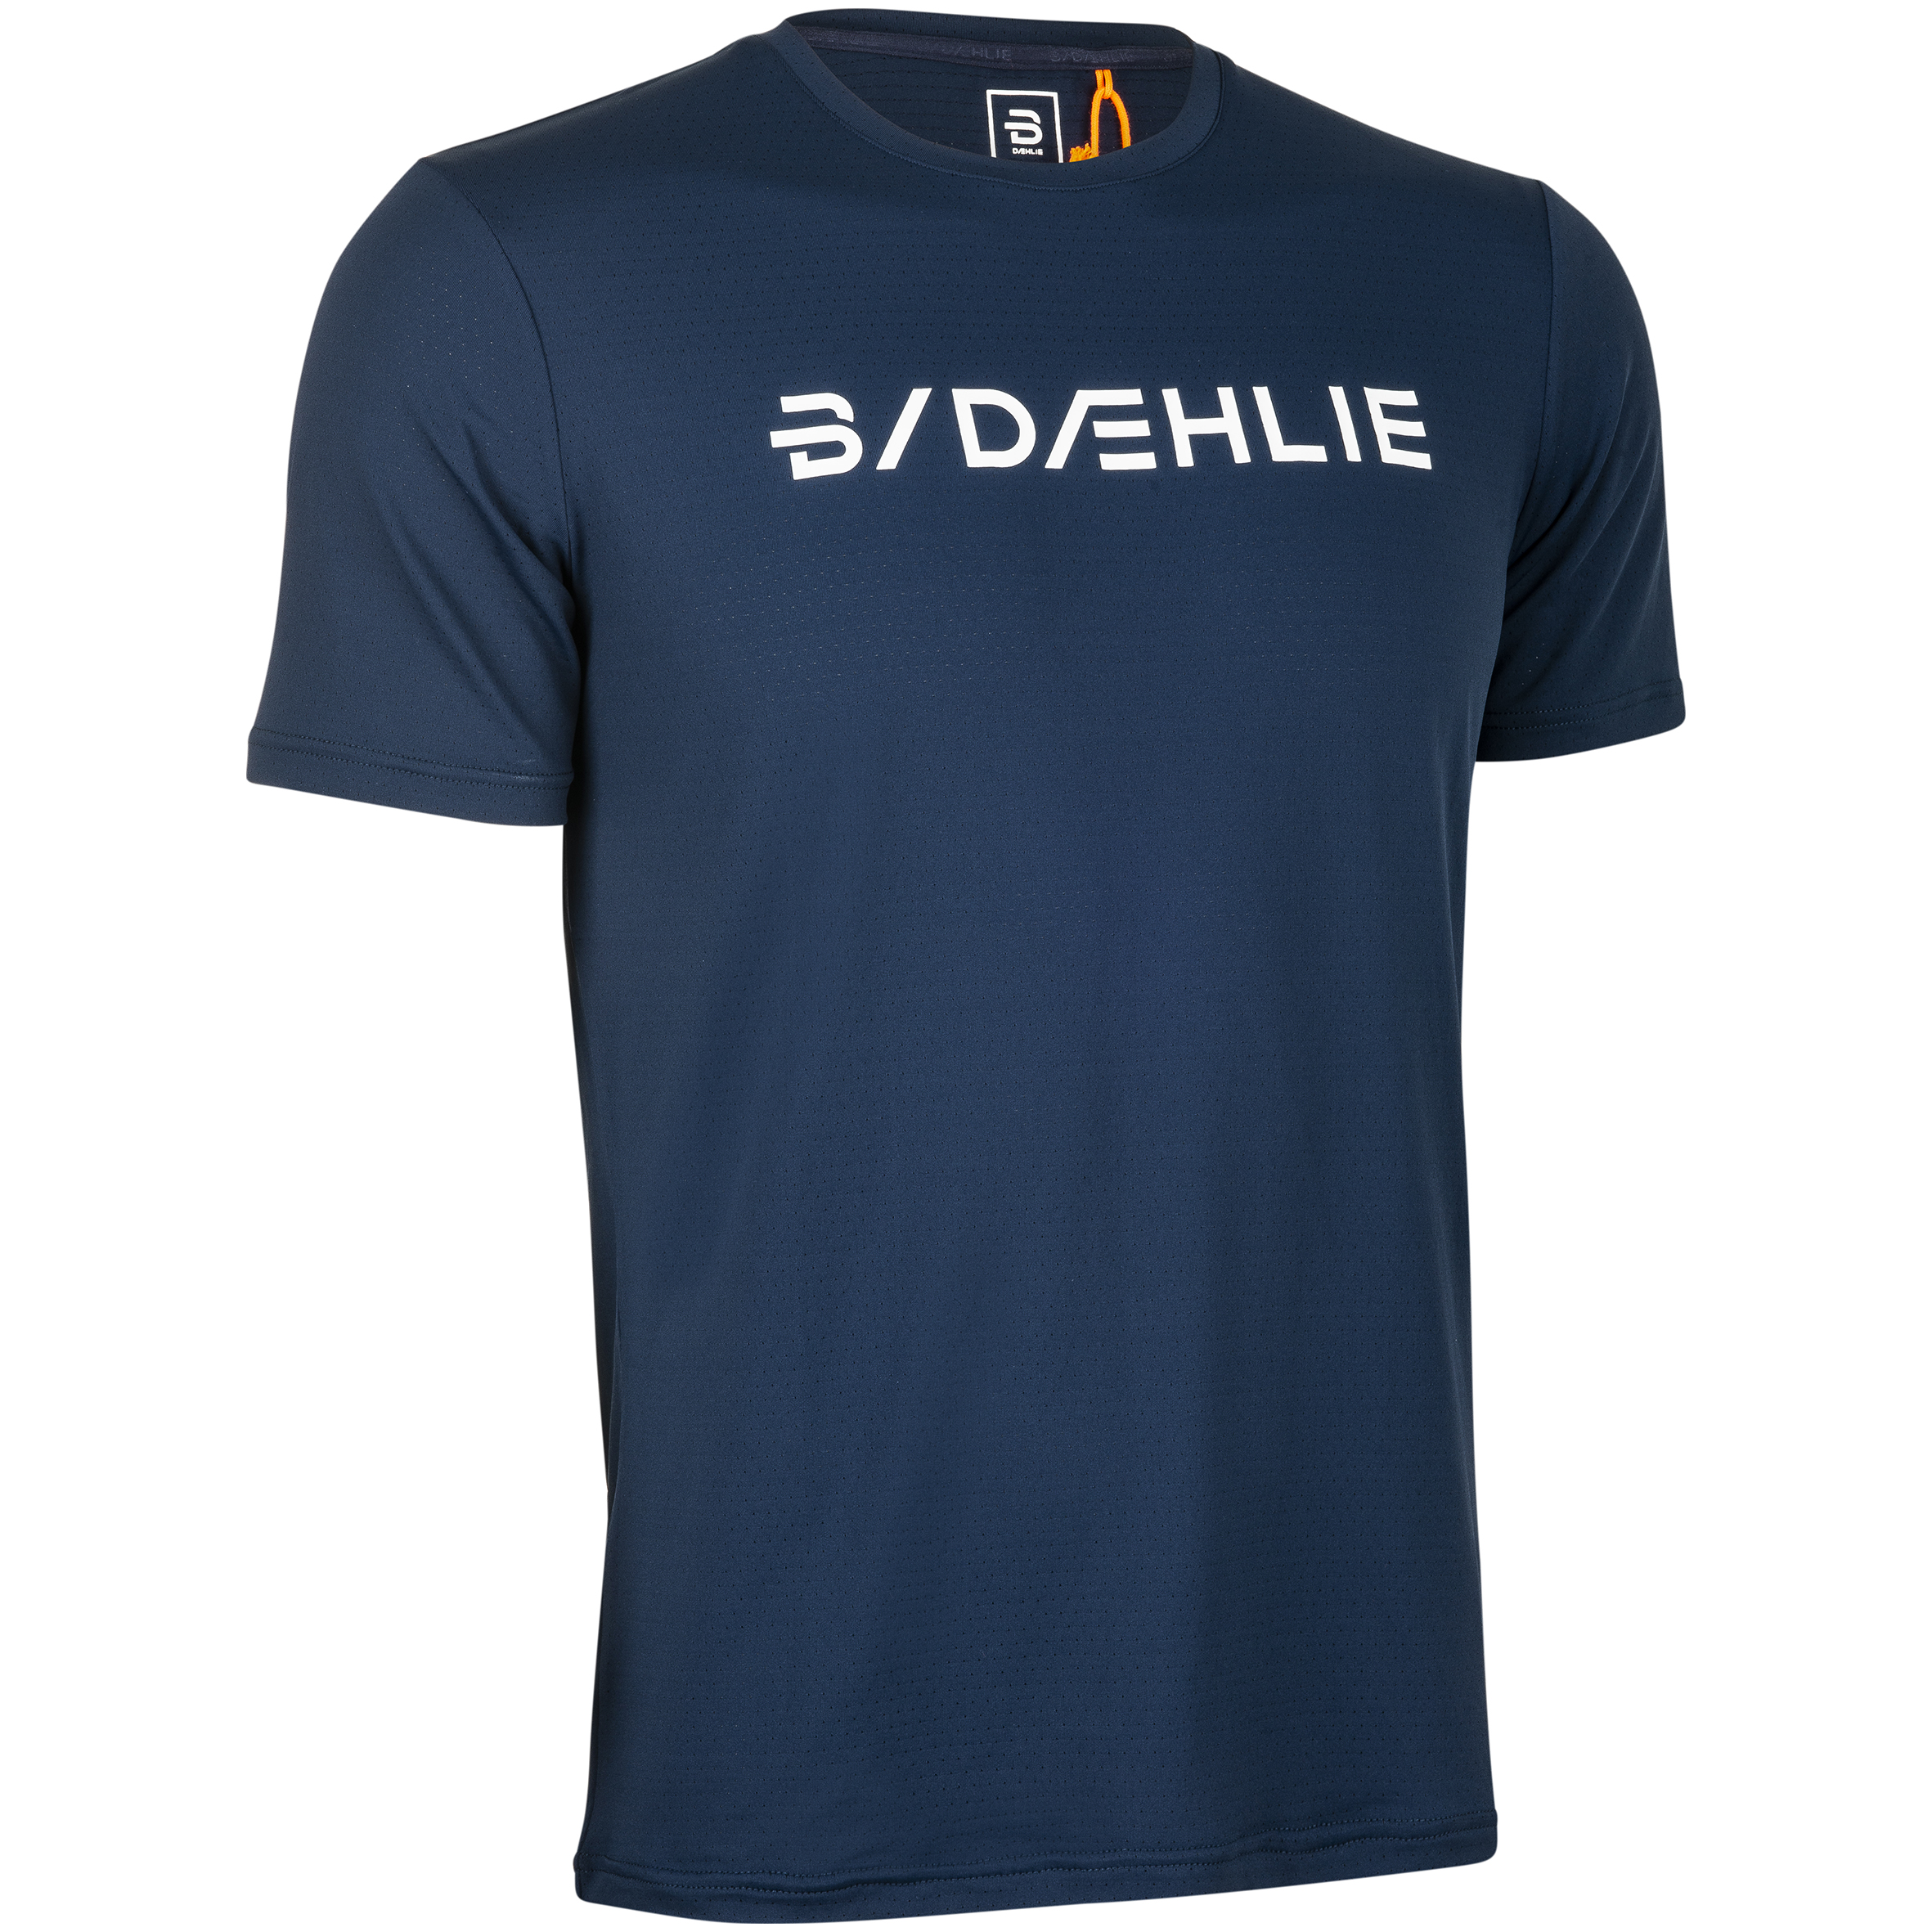 Dæhlie Men’s T-Shirt Focus Navy